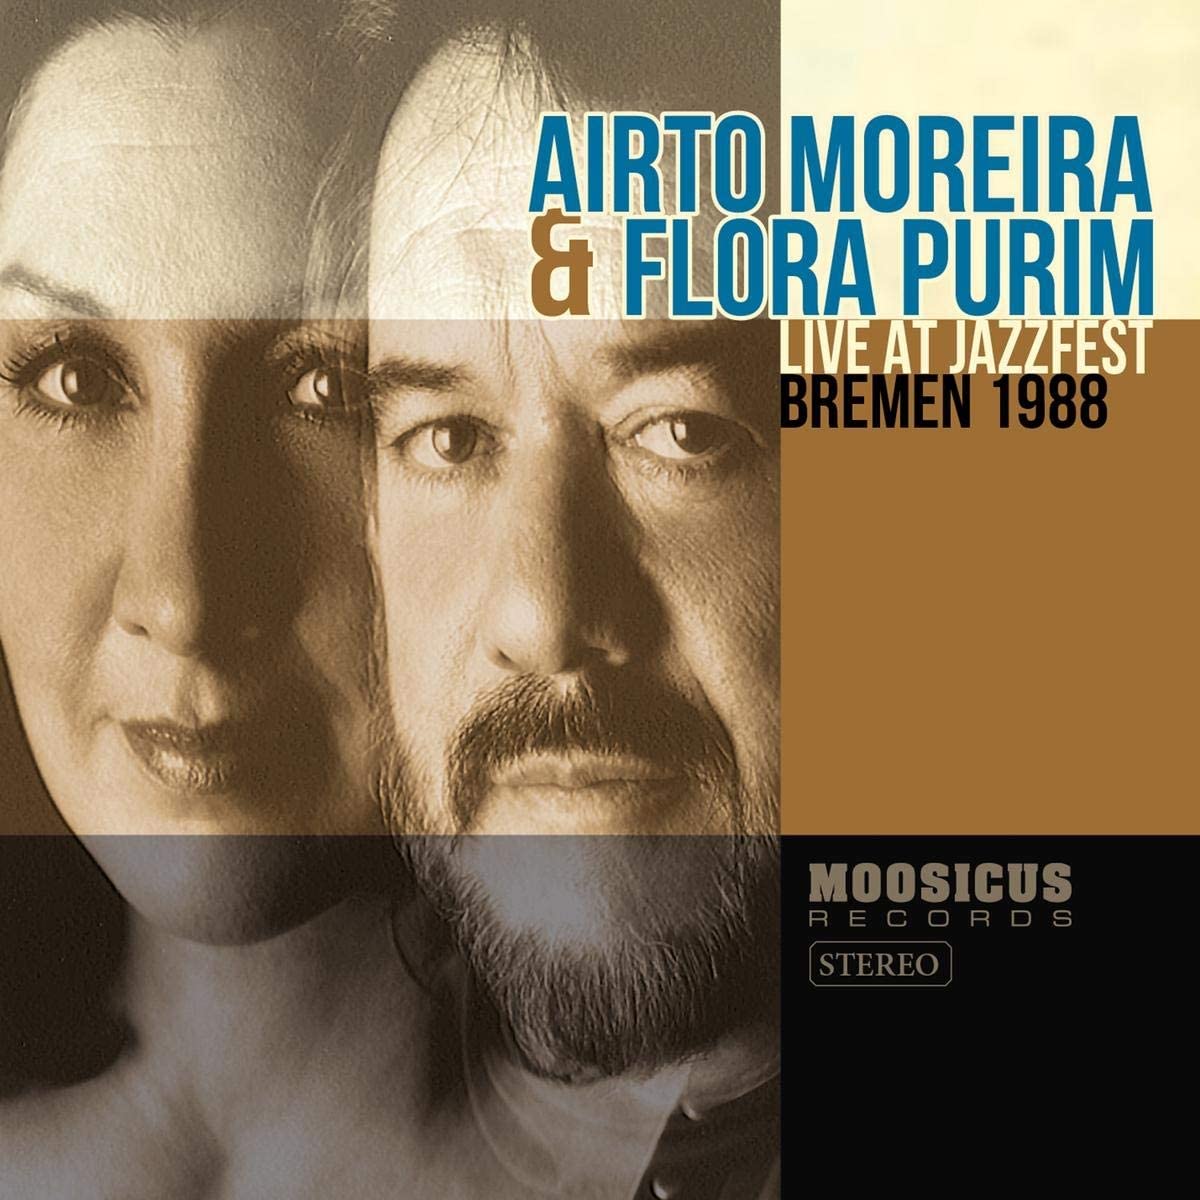 AIRTO MOREIRA - Airto Moreira & Flora Purim : Live At Jazzfest Bremen 1988 cover 